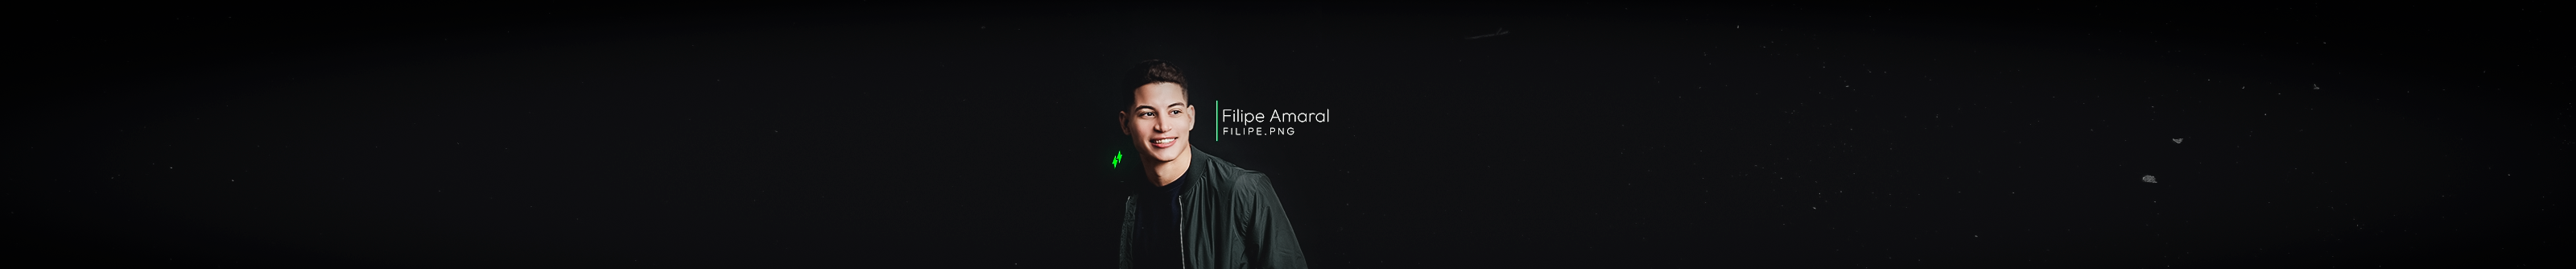 Filipe Amaral's profile banner